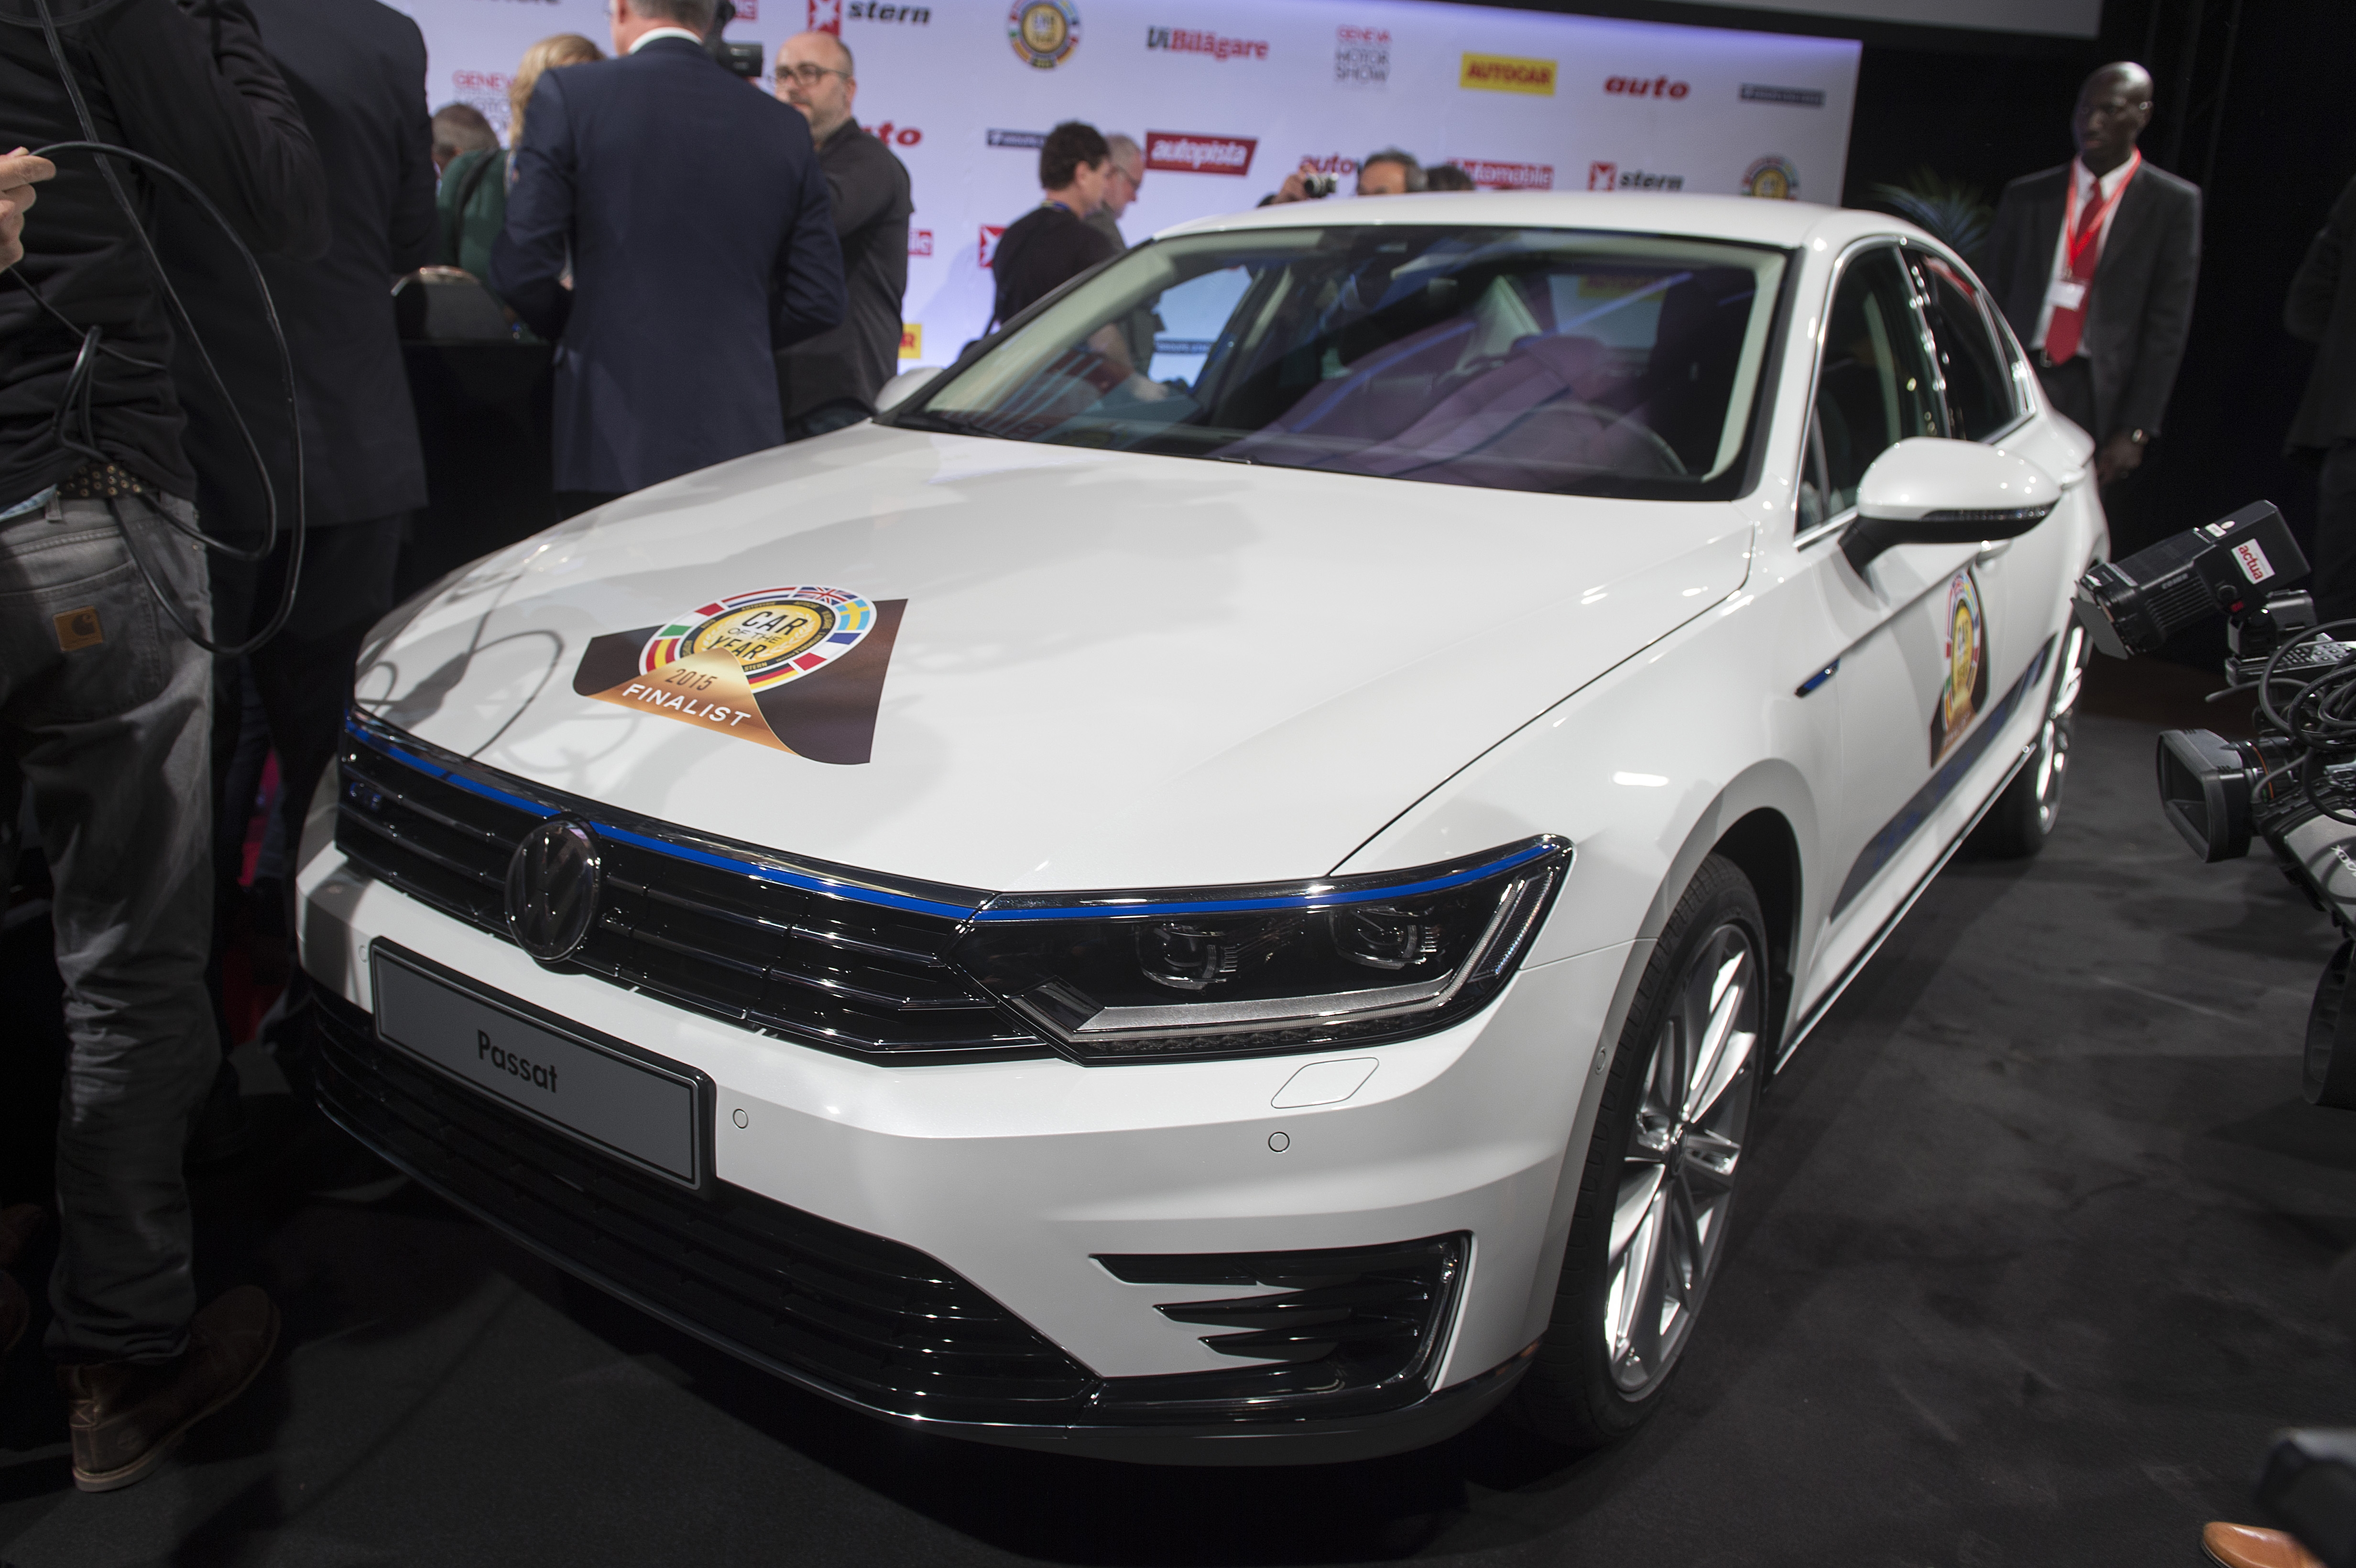 Passat de Volkswagen gana el "auto del año" en Ginebra